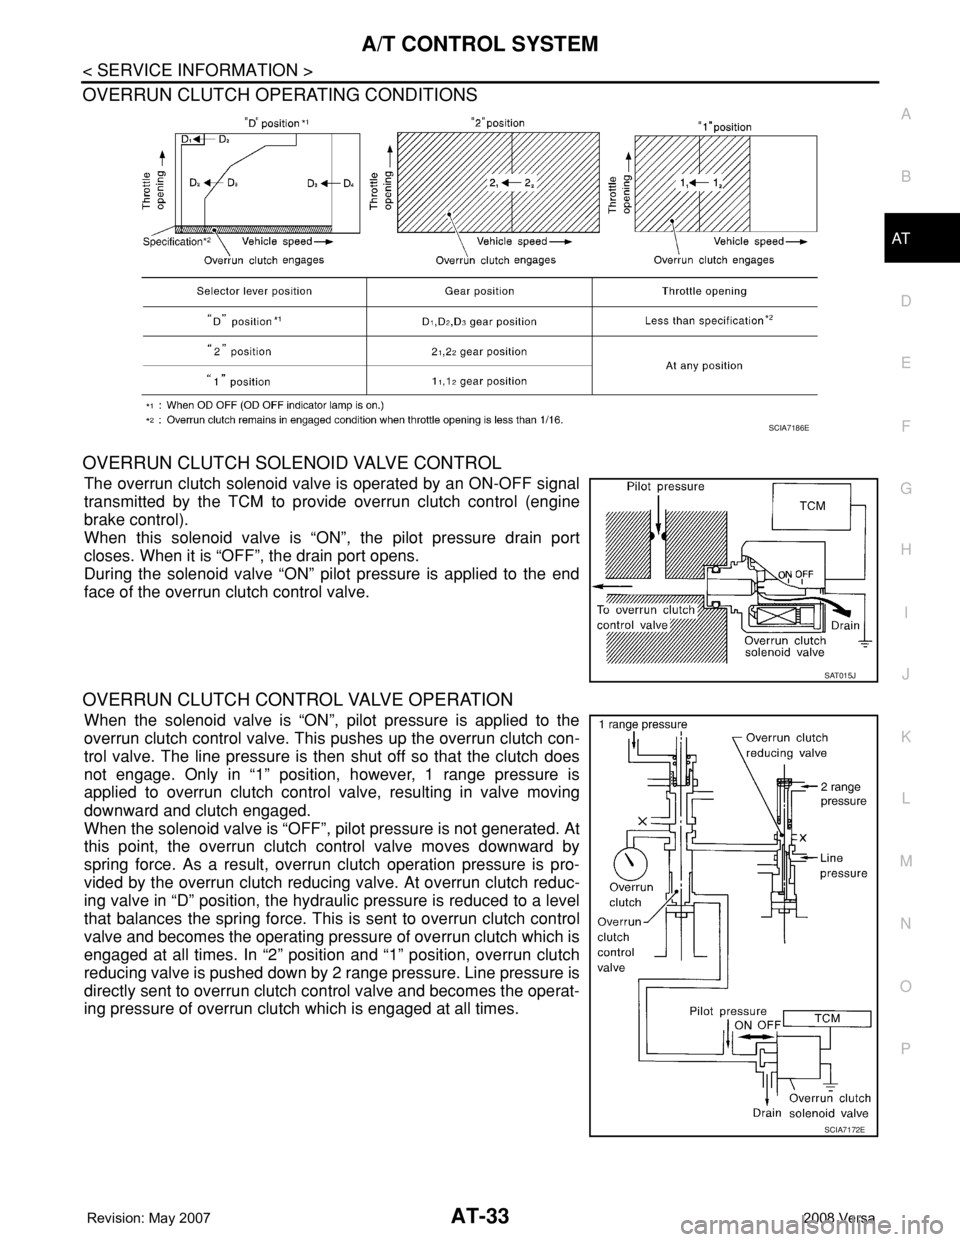 NISSAN LATIO 2008  Service Service Manual A/T CONTROL SYSTEM
AT-33
< SERVICE INFORMATION >
D
E
F
G
H
I
J
K
L
MA
B
AT
N
O
P
OVERRUN CLUTCH OPERATING CONDITIONS
OVERRUN CLUTCH SOLENOID VALVE CONTROL
The overrun clutch solenoid valve is operated